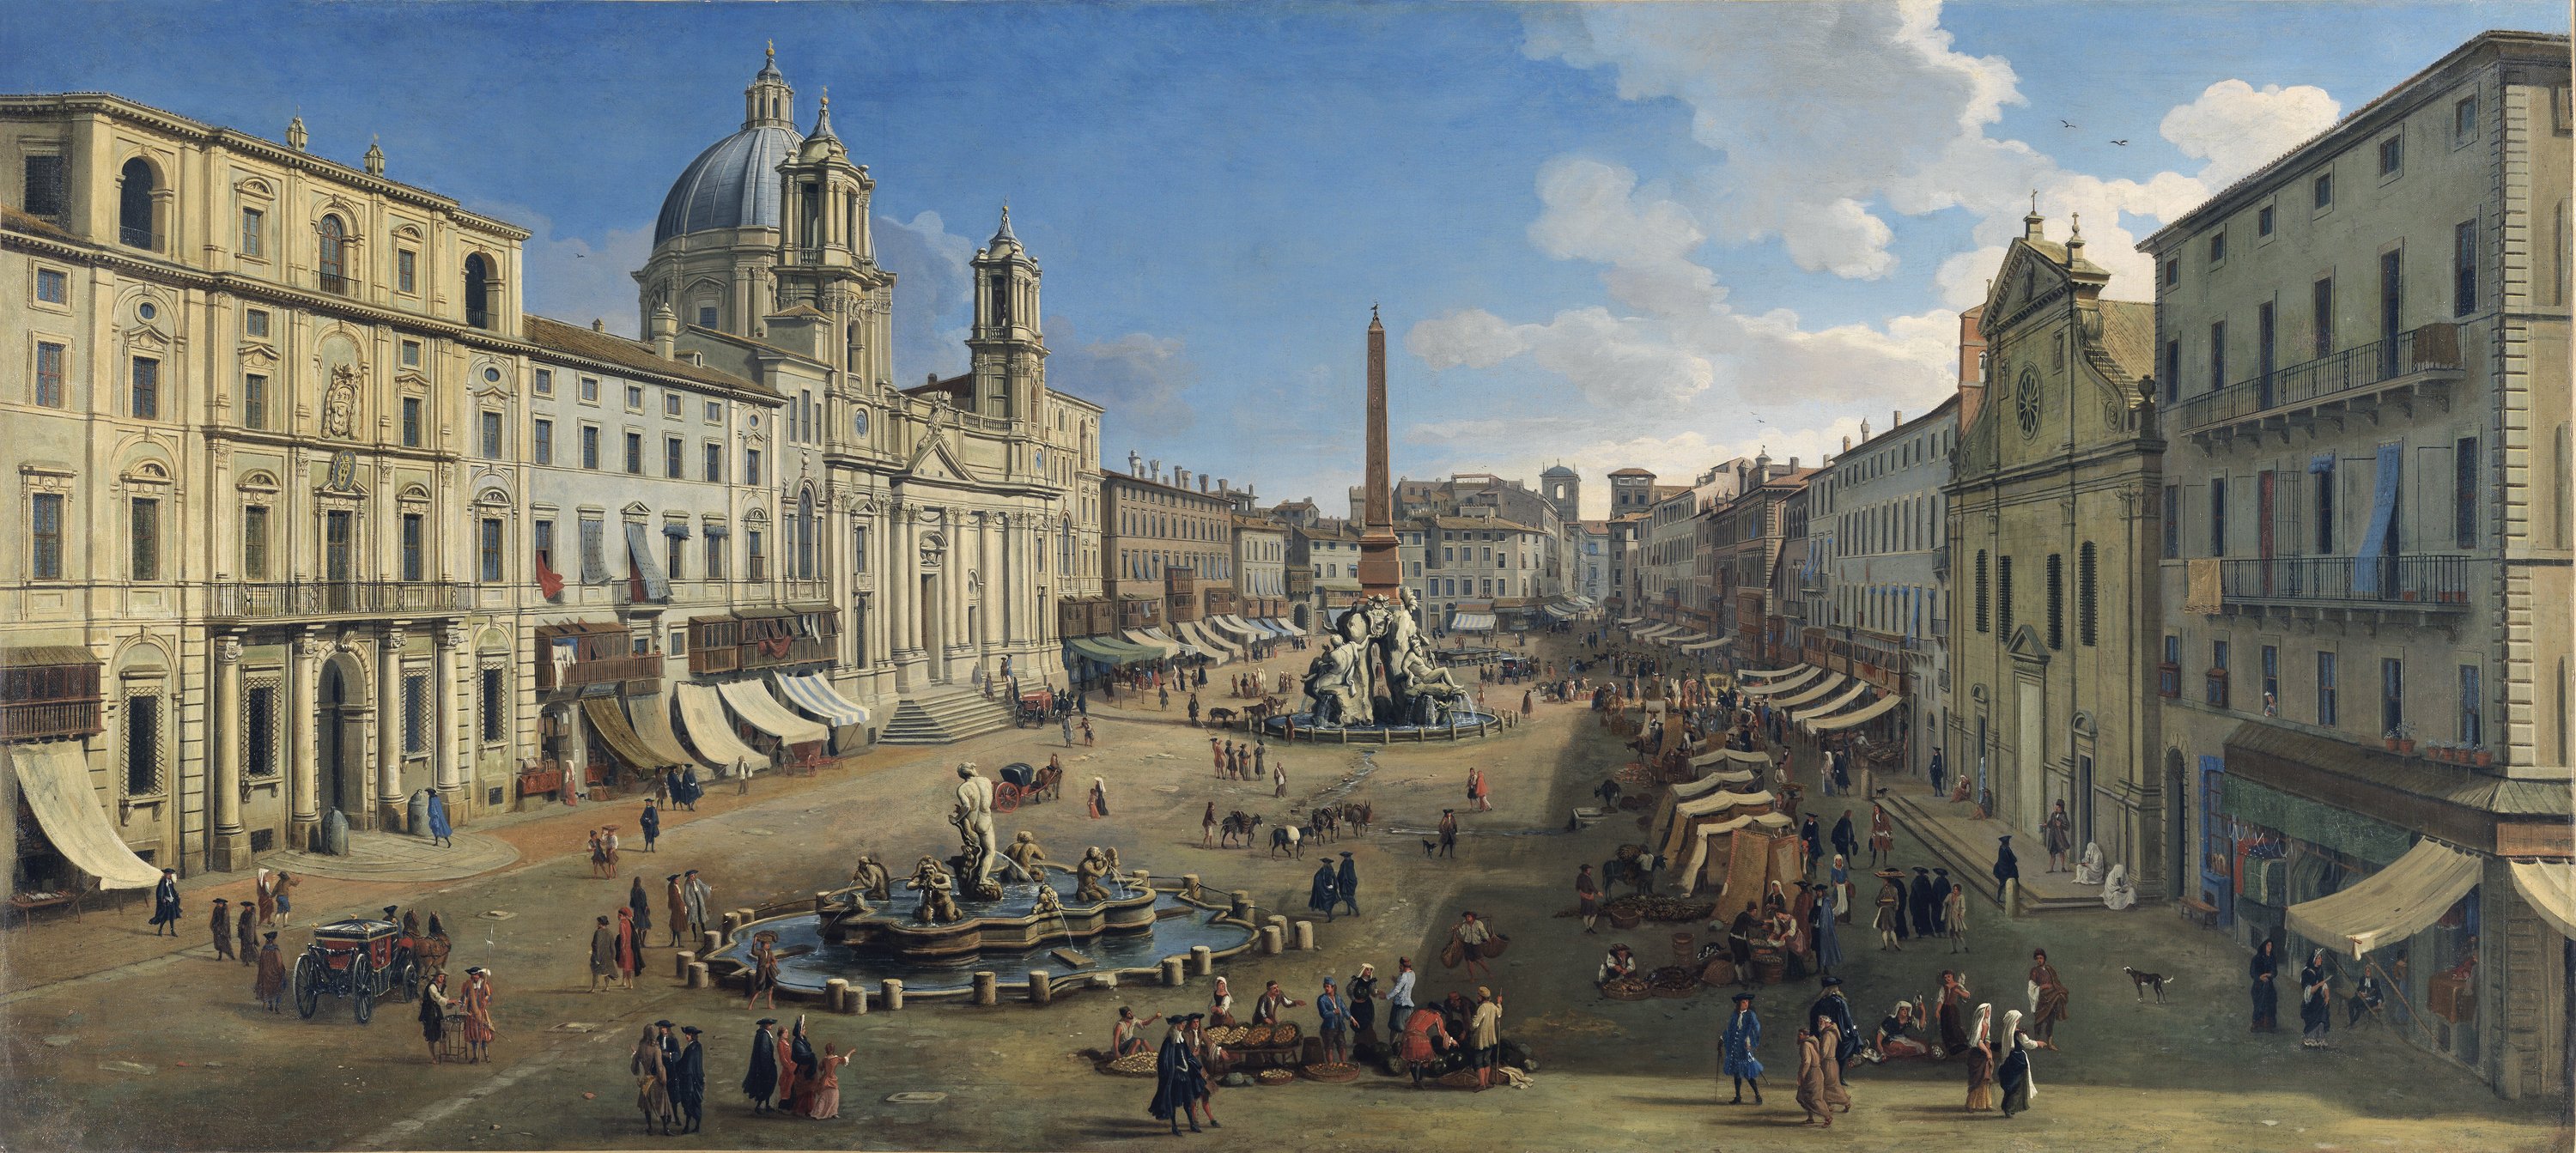 Piazza Navona, Rome. Piazza Navona, Roma, 1699